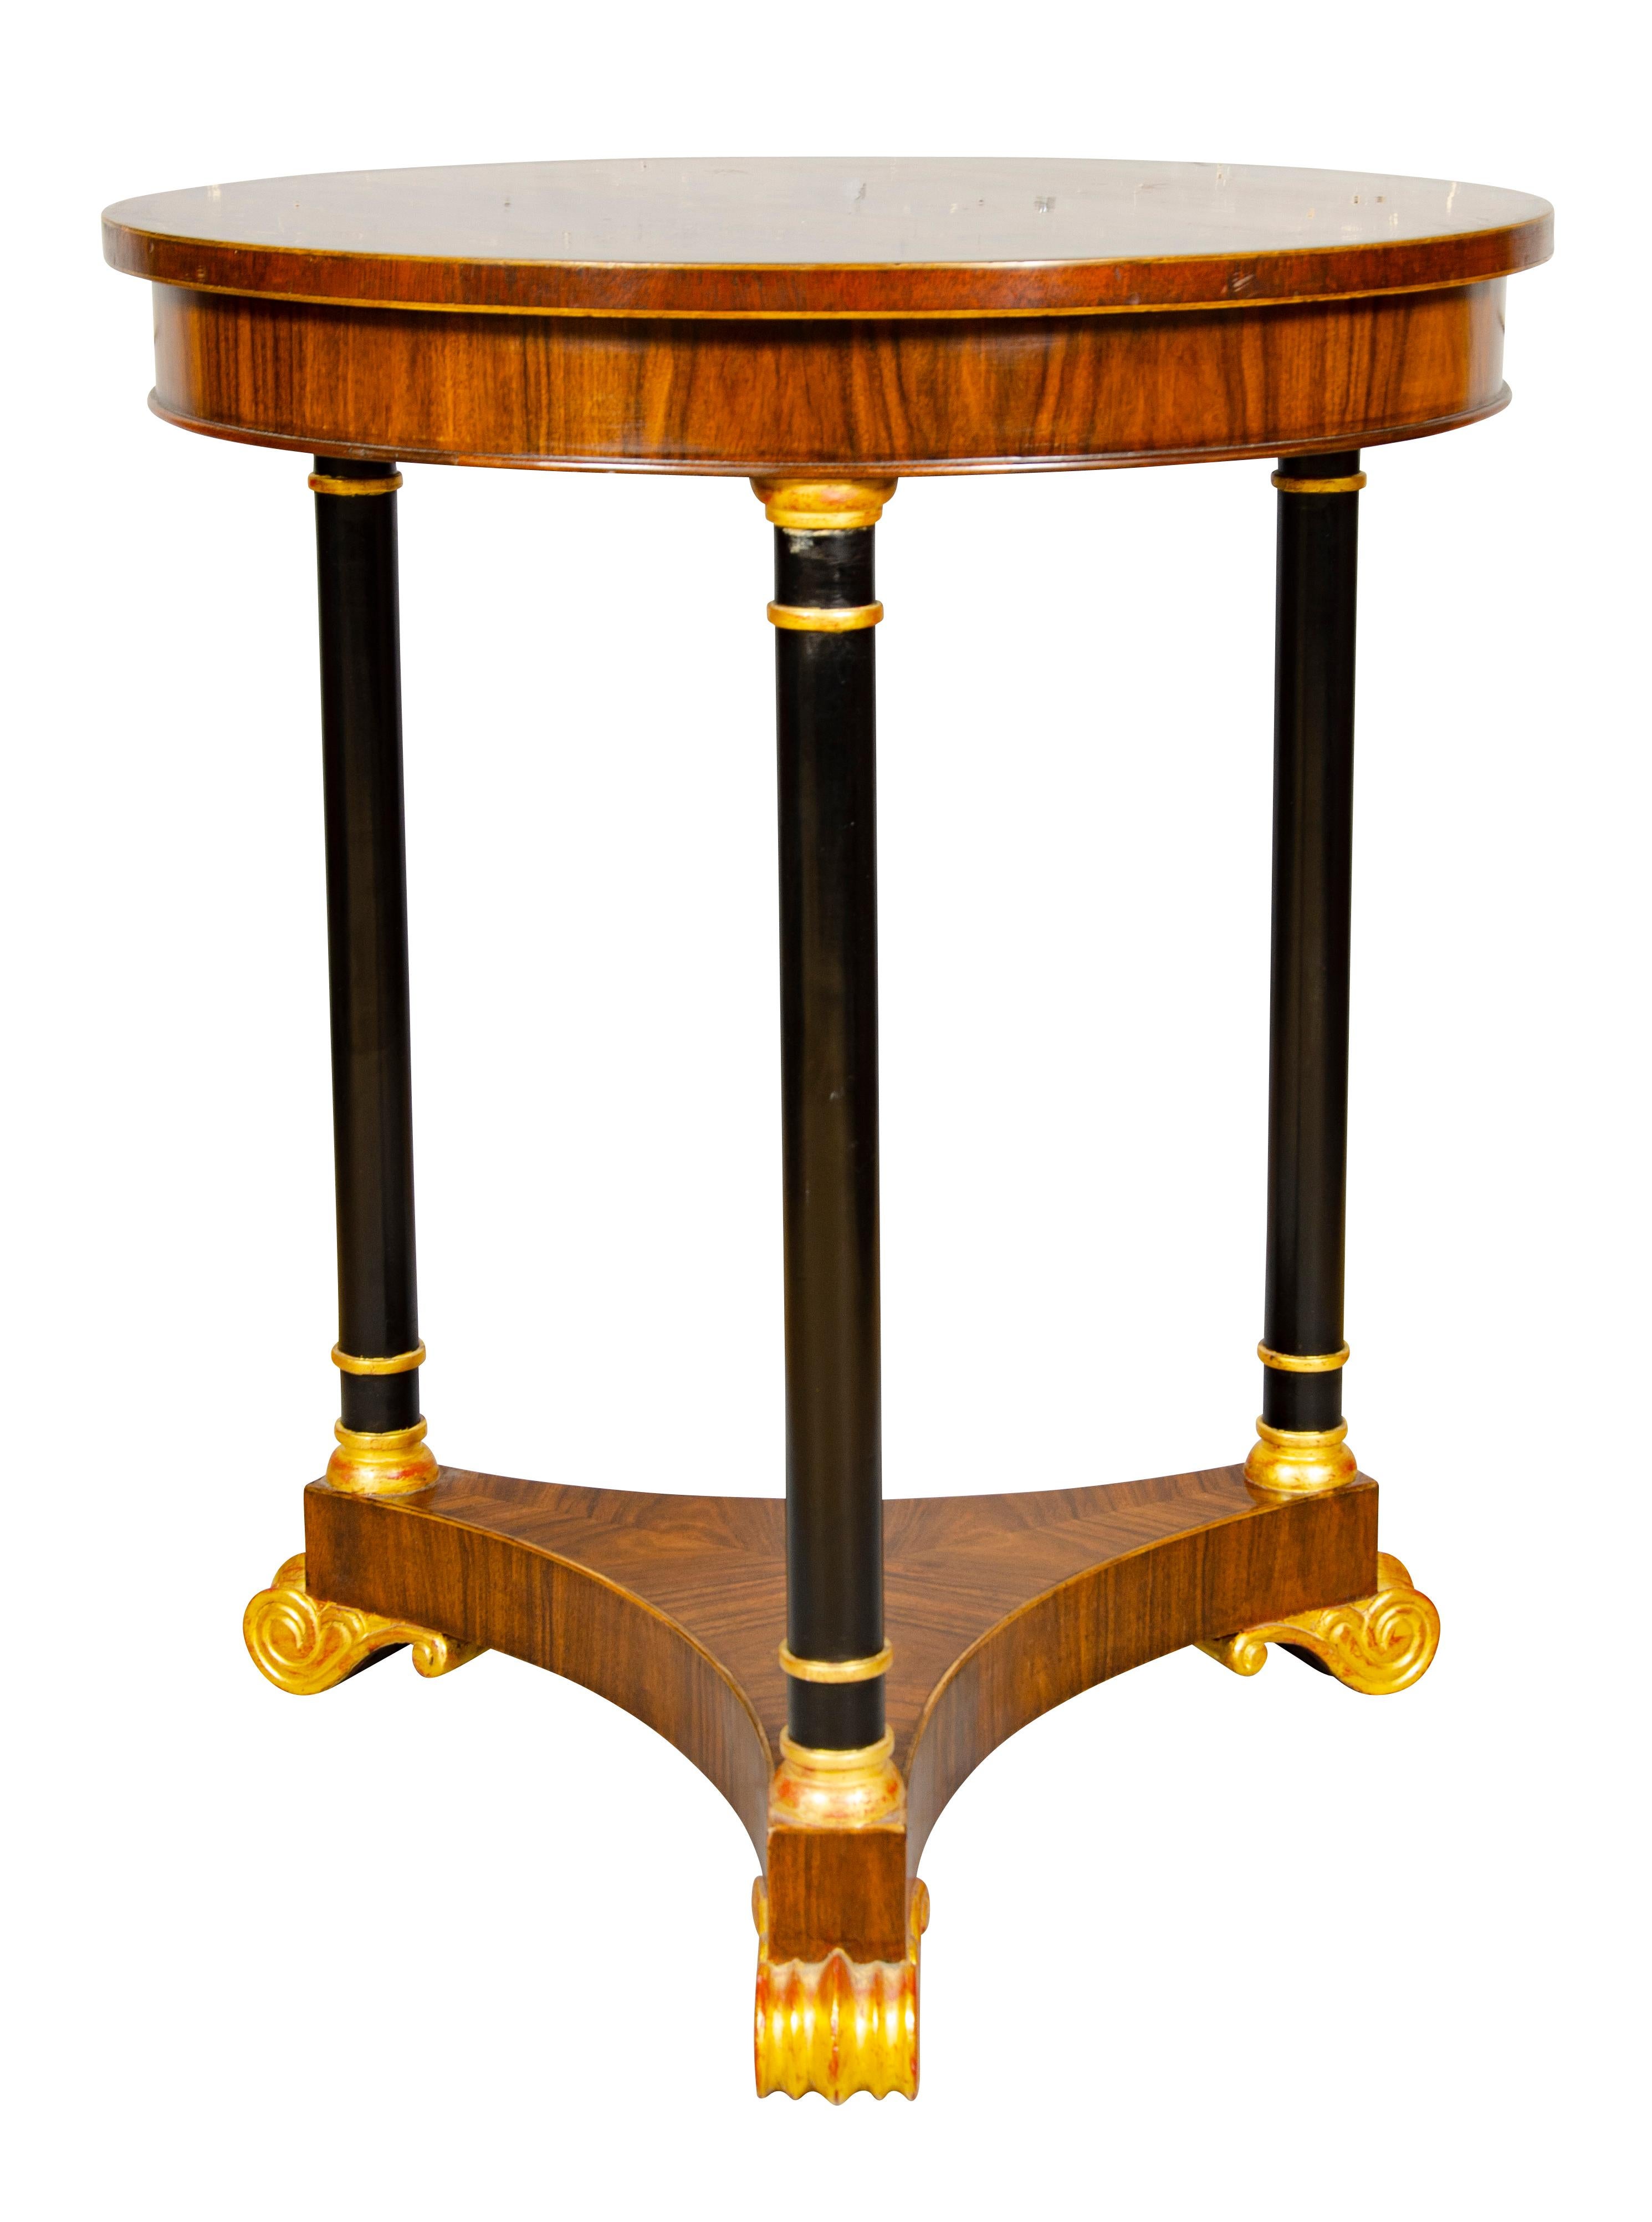 Ebonized Regency Style Mahogany and Giltwood Table For Sale